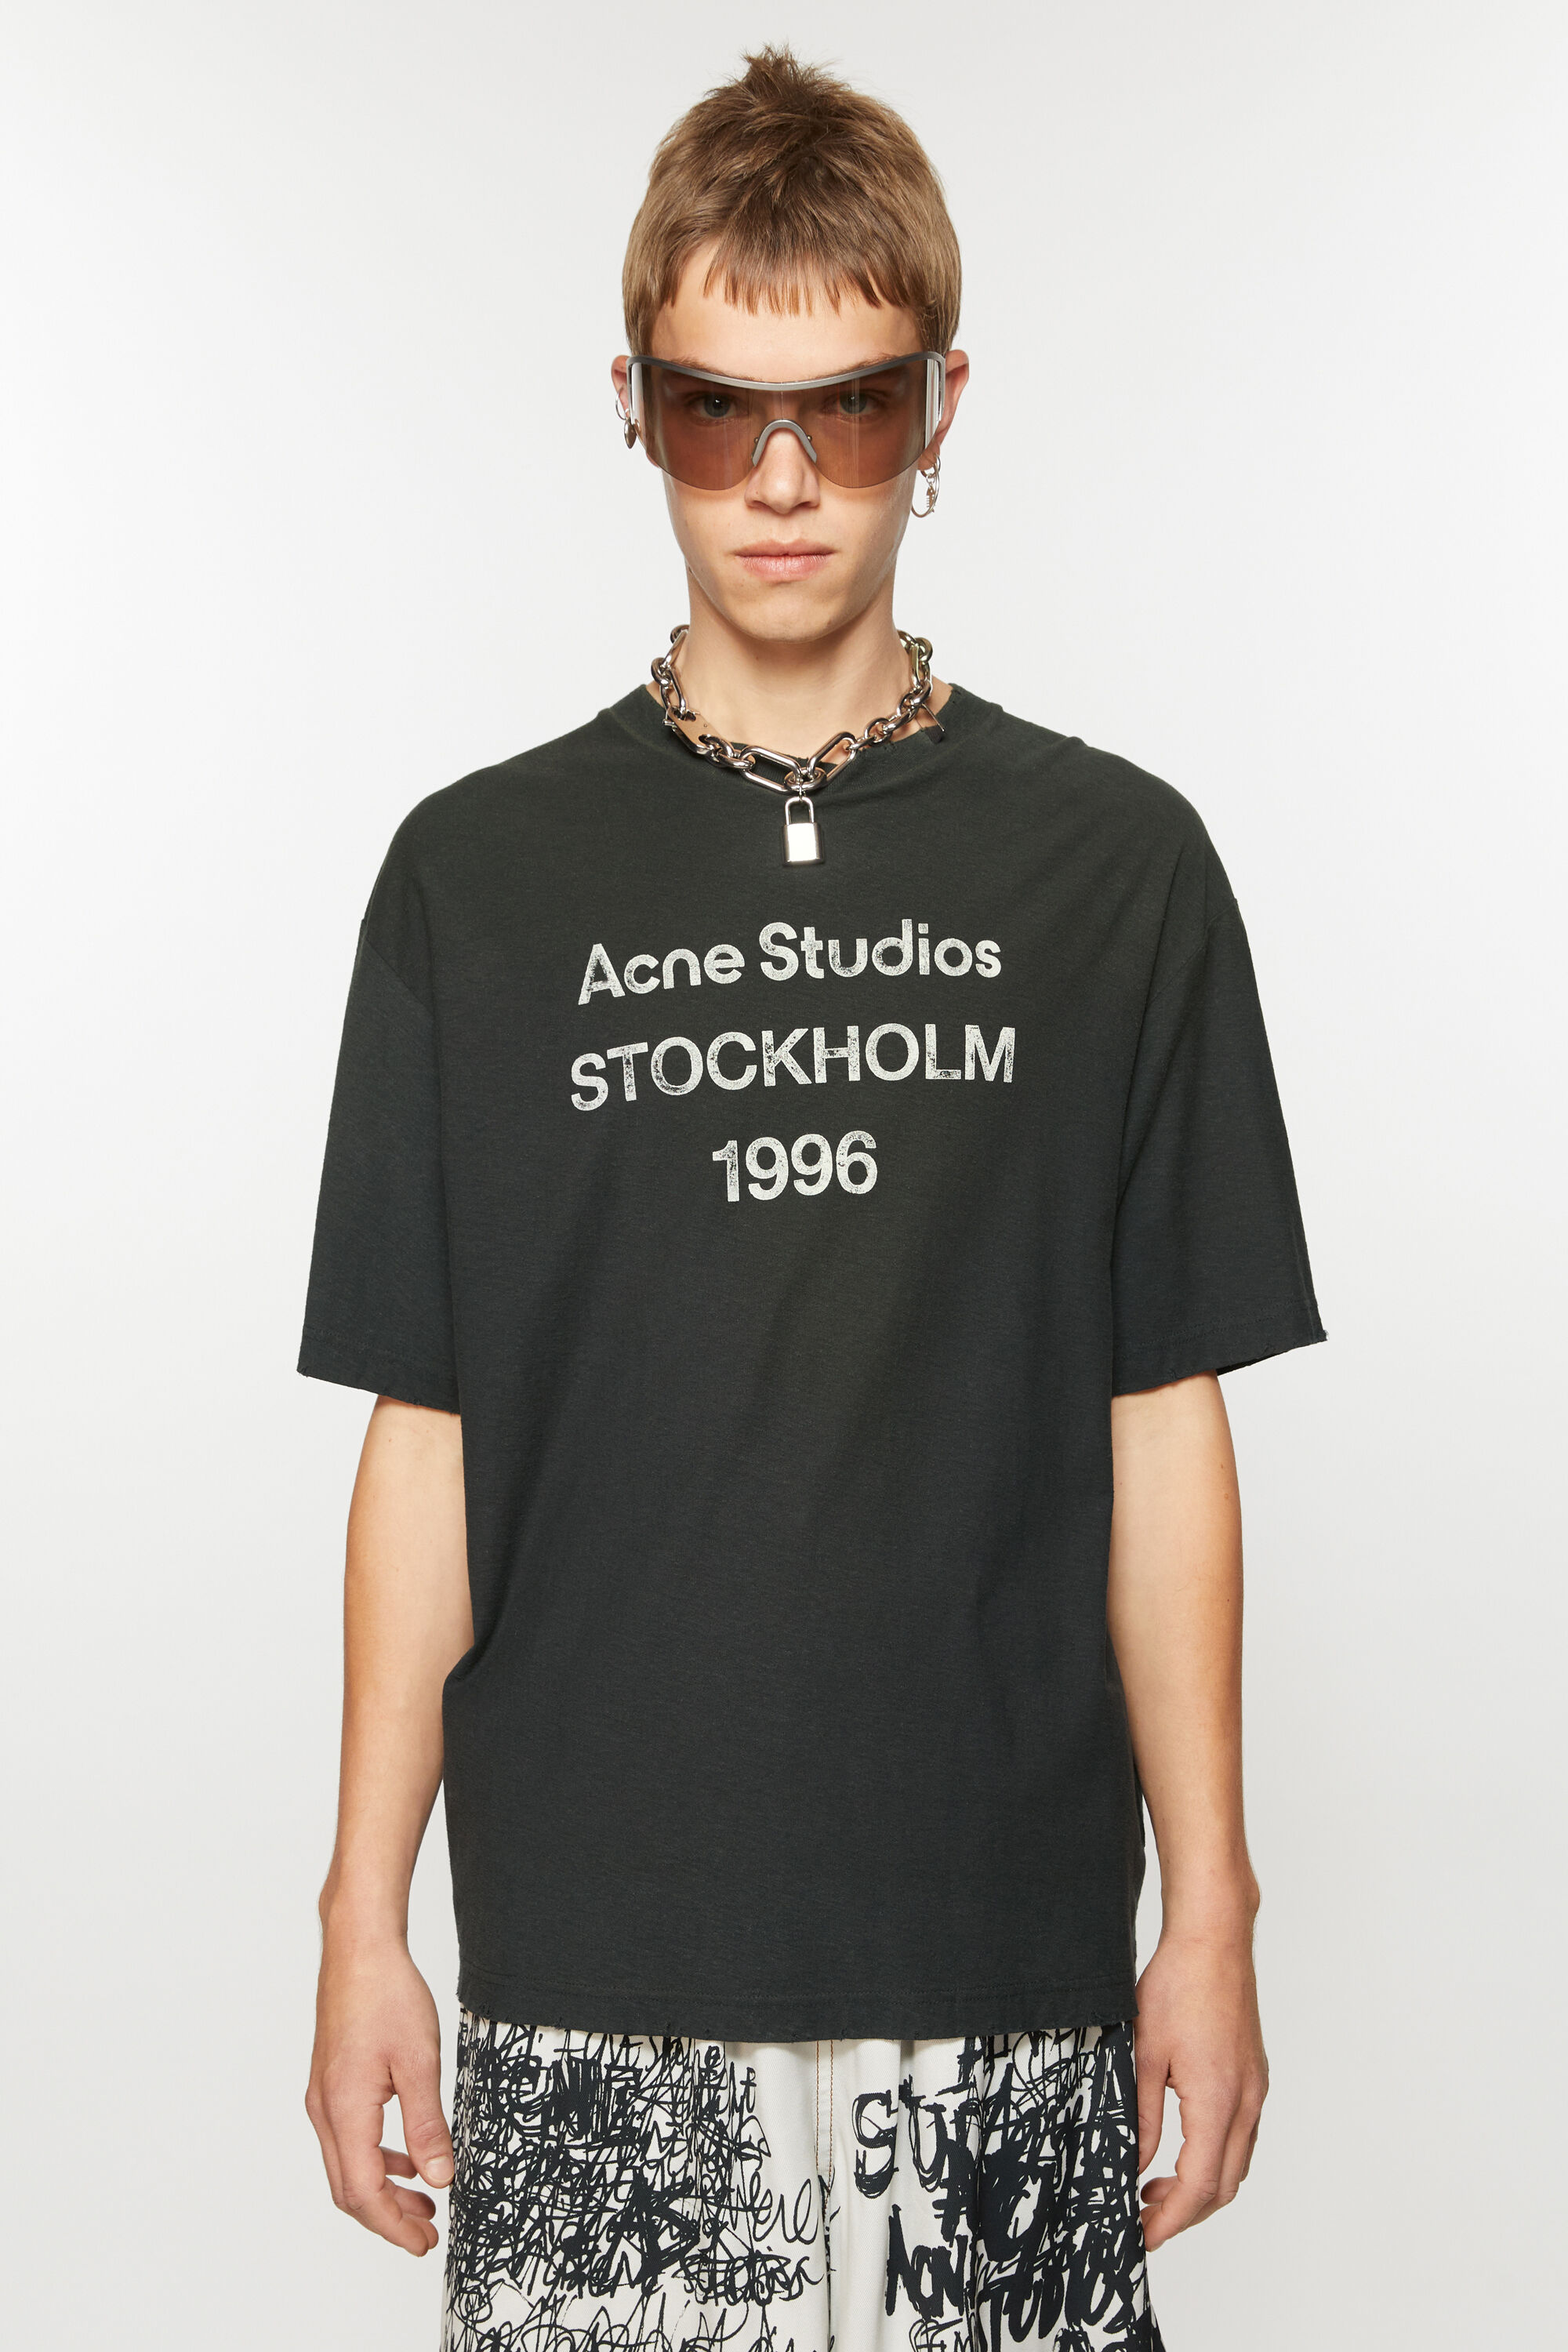 Acne Studios – メンズTシャツ